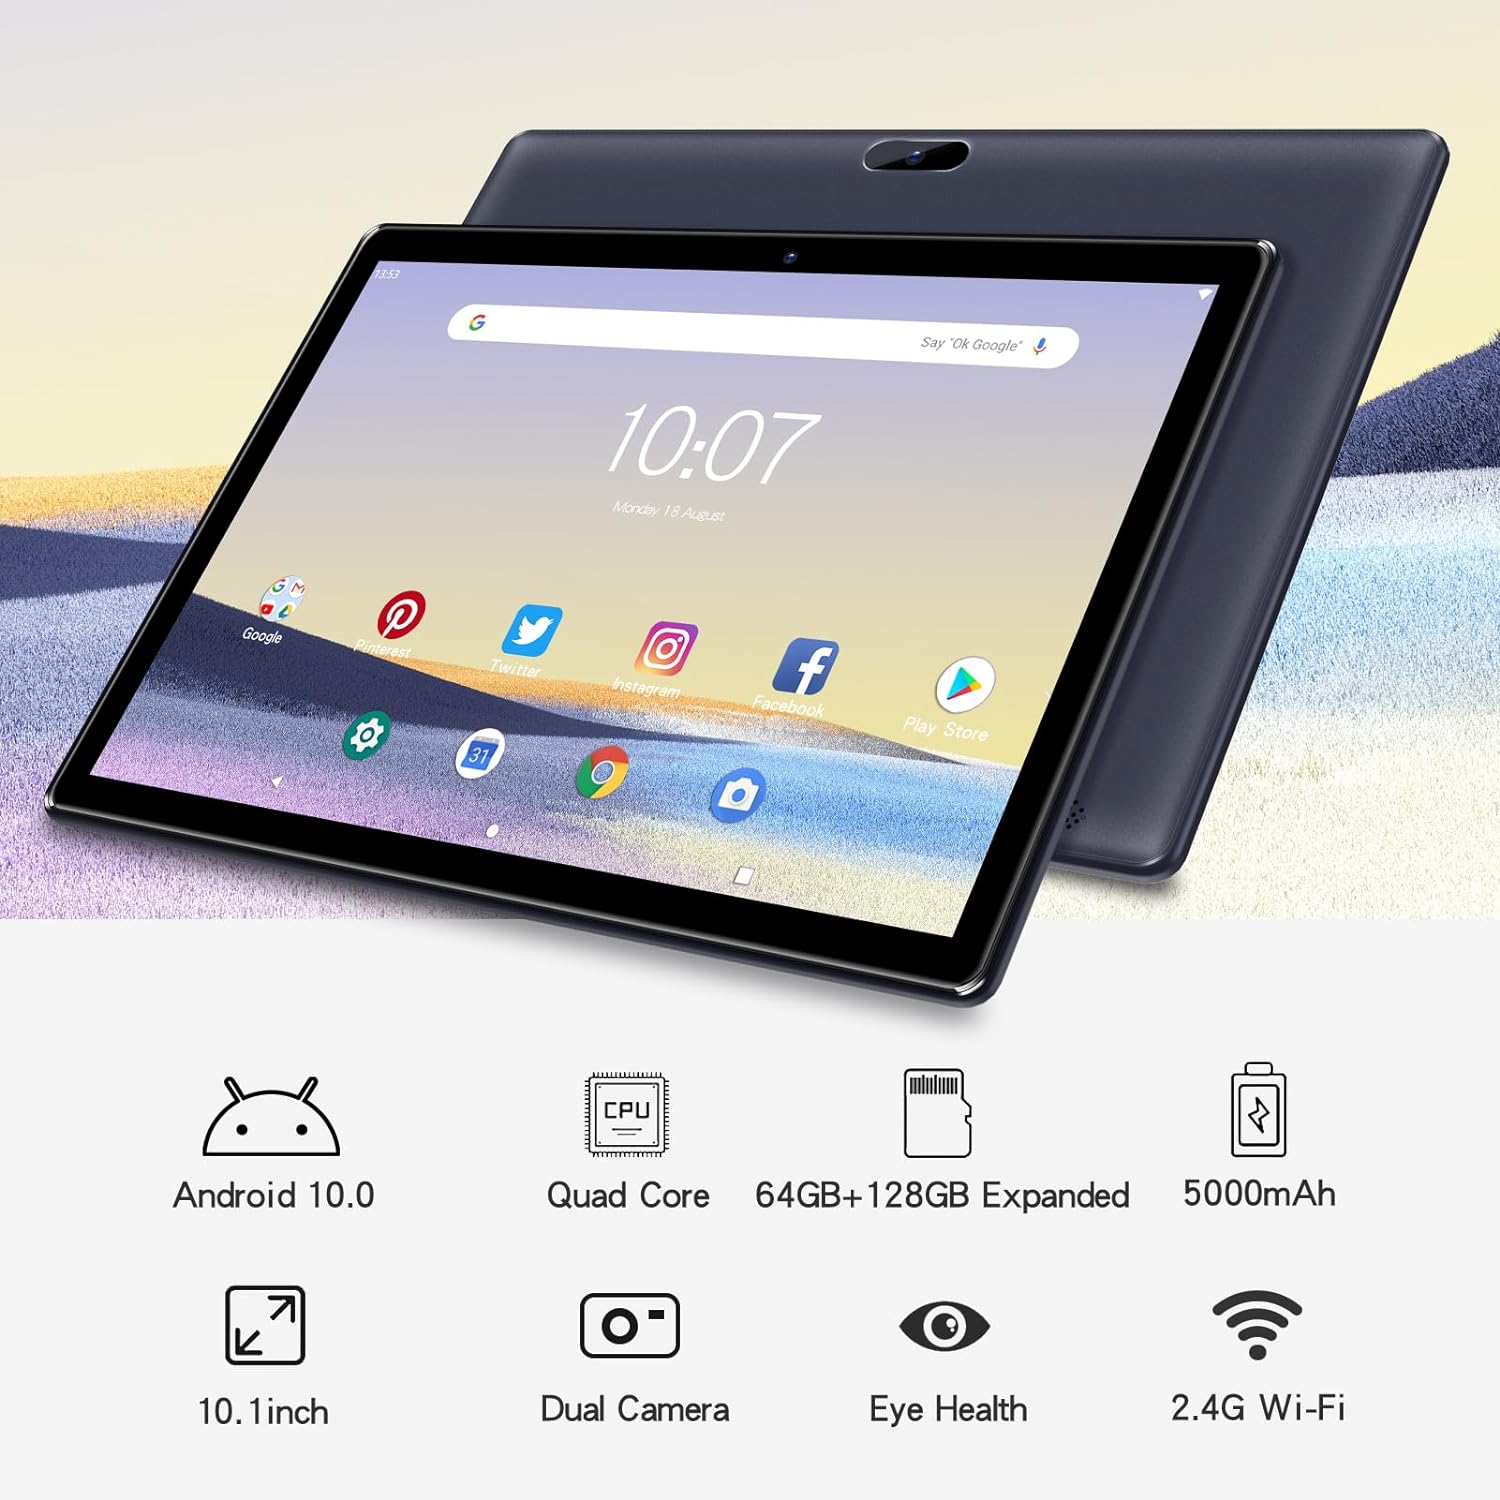 PRITOM Android Tablet 10 inch, M10, 2 GB RAM, 64GB Android Tablet, 10.1 inch IPS HD Display, GPS, FM, Quad-Core Processor, Wi-Fi (M10 Black)